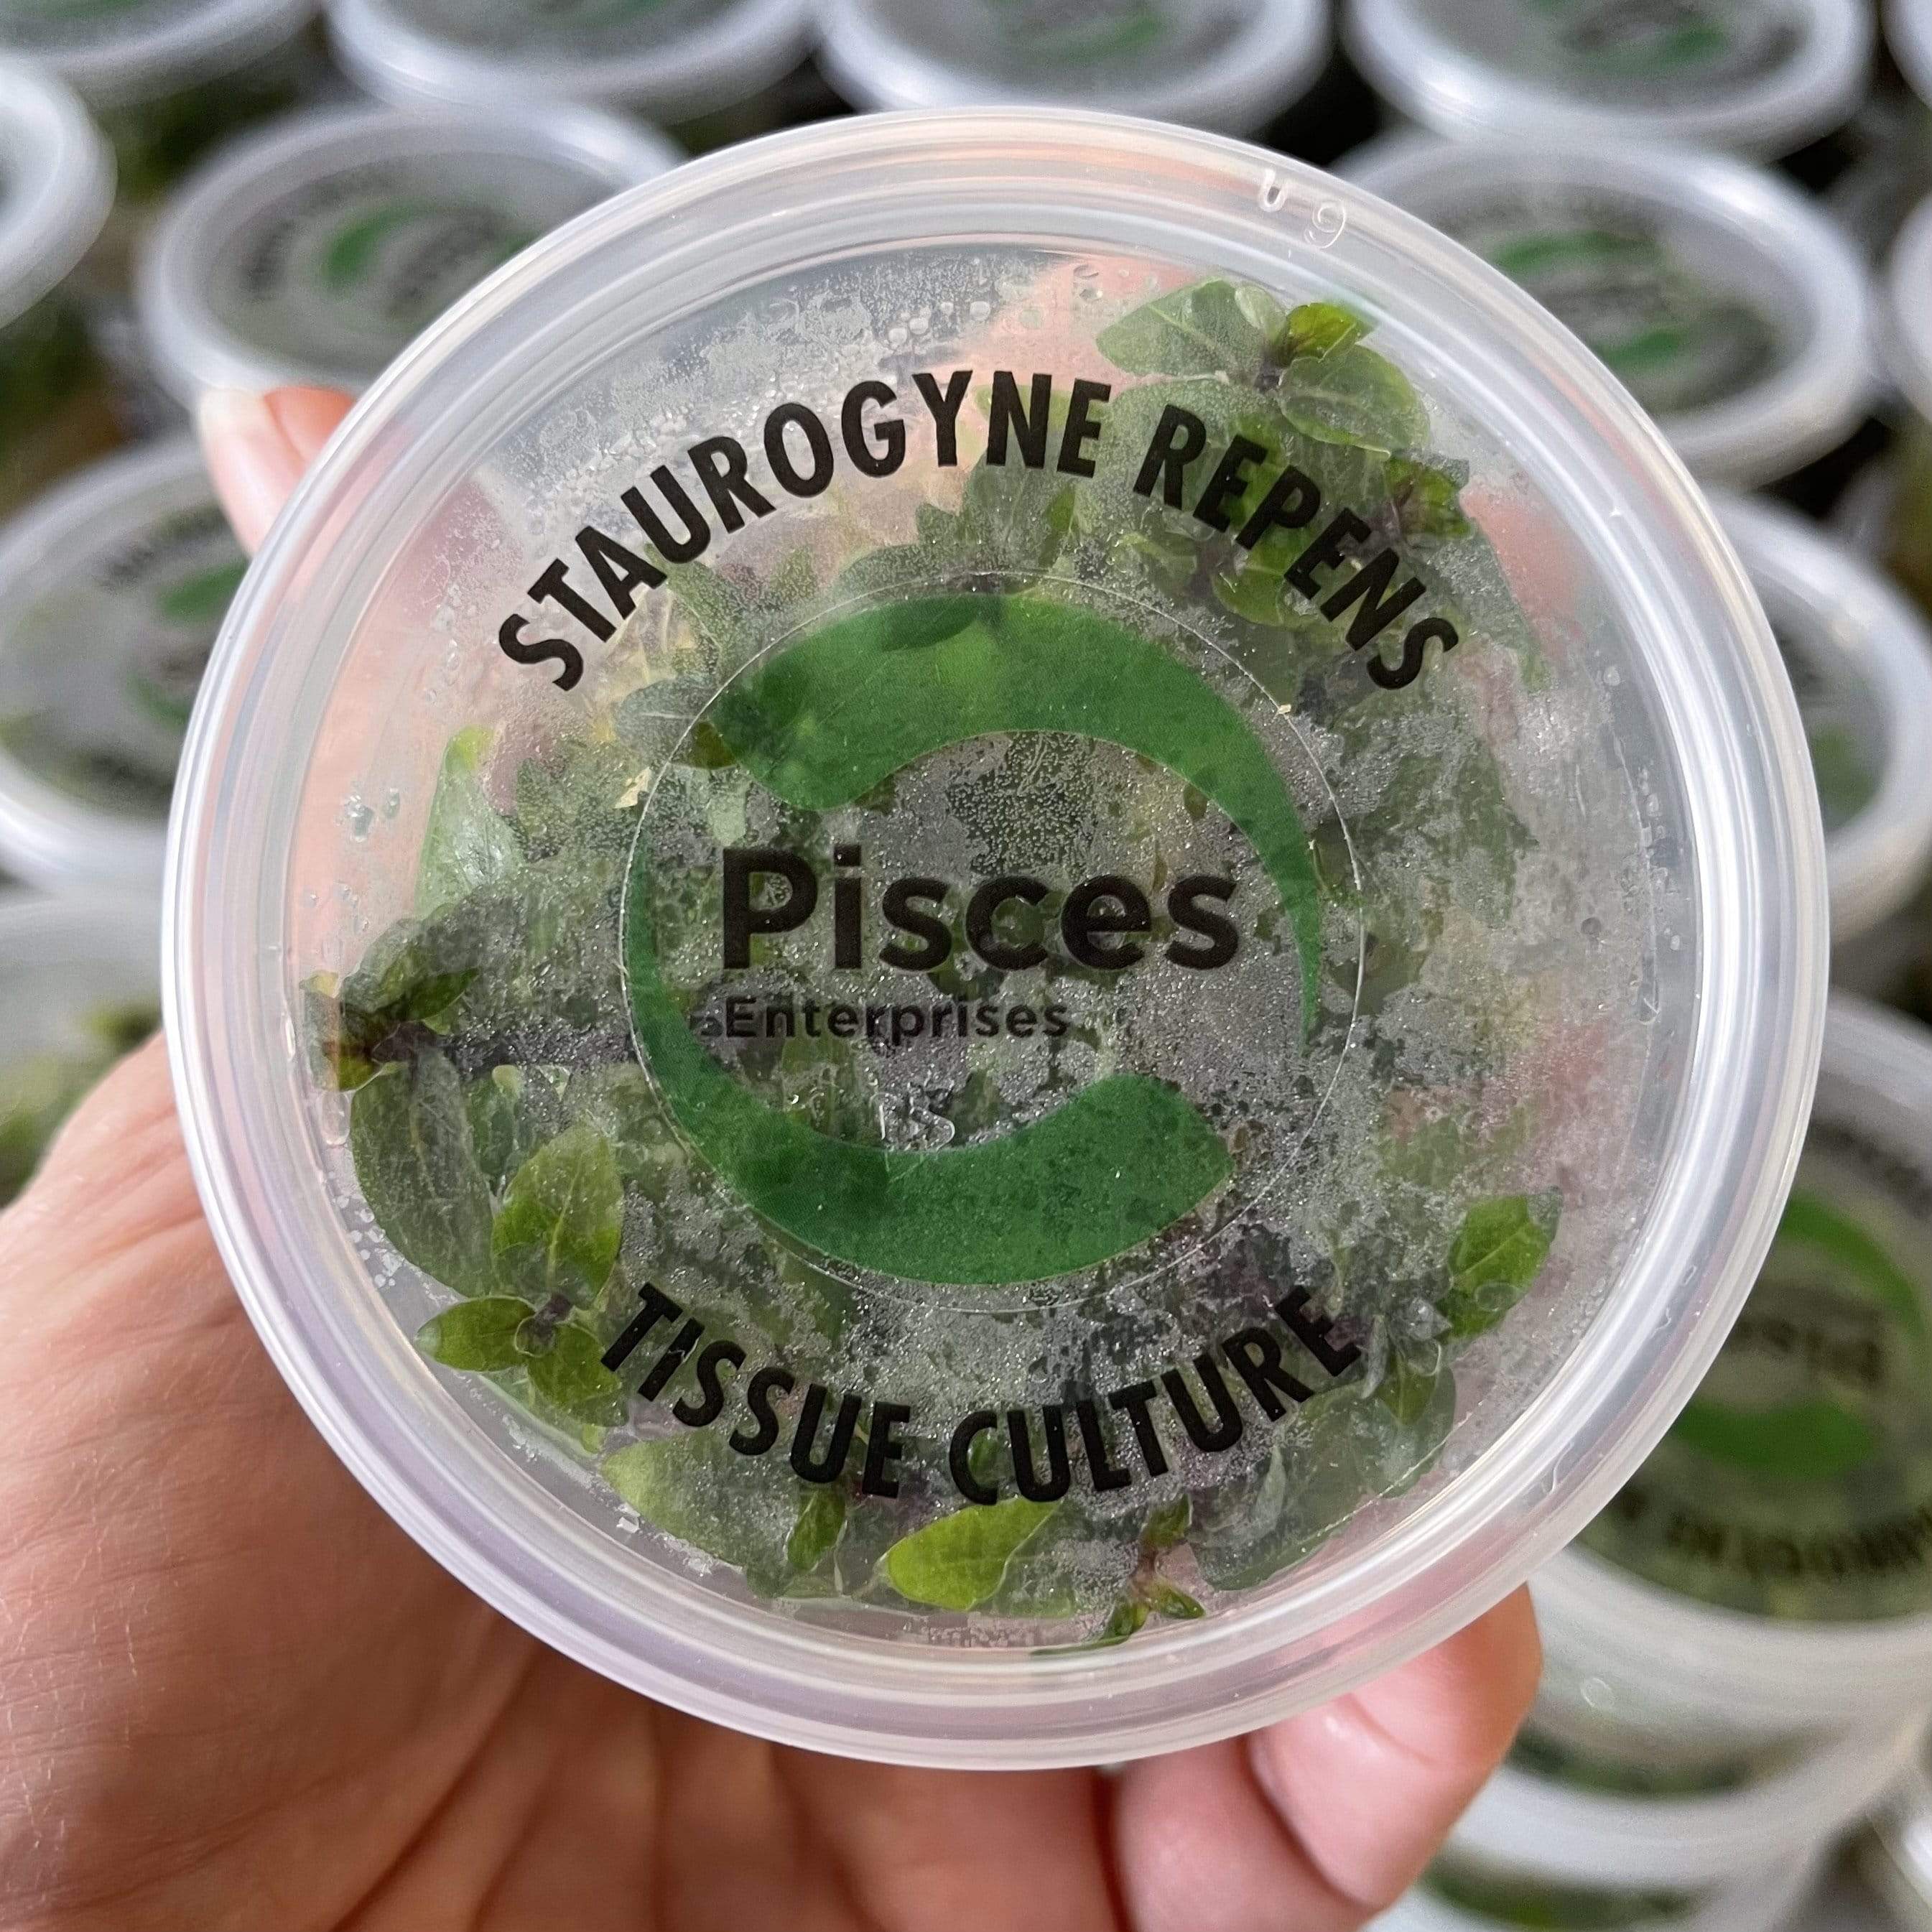 Pisces Enterprises Tissue Culture Staurogyne Tissue Culture